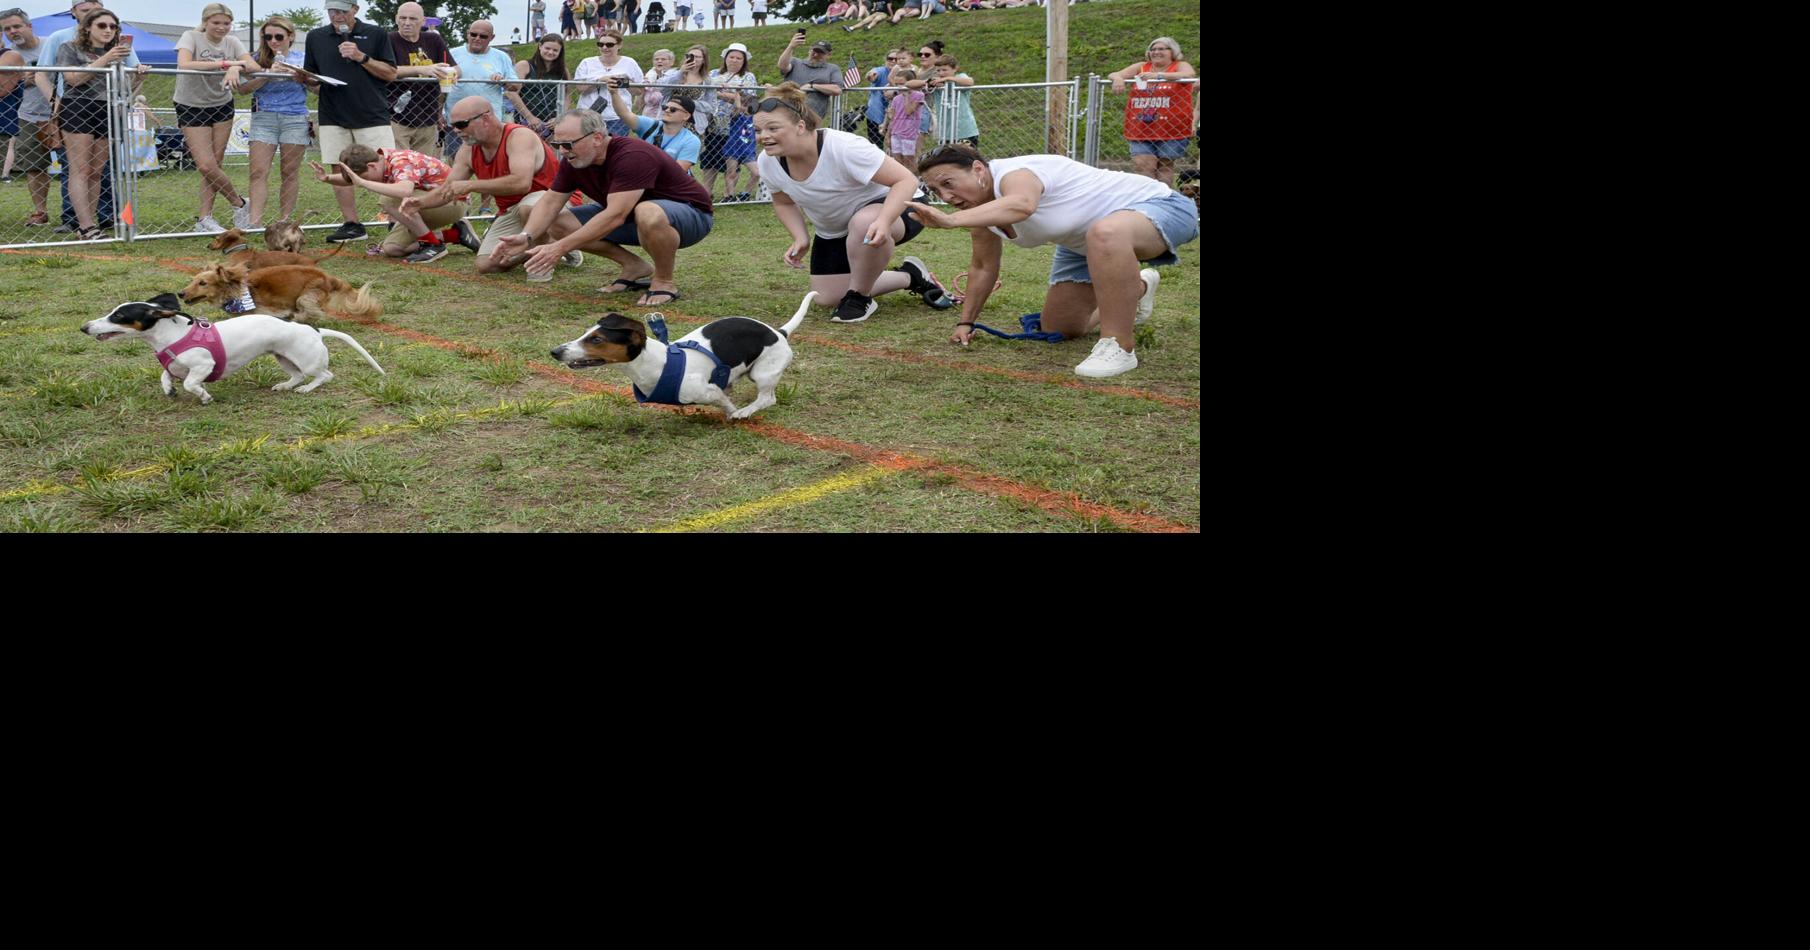 Regatta 2023 Wiener dogs race for glory at Magic Island Charleston